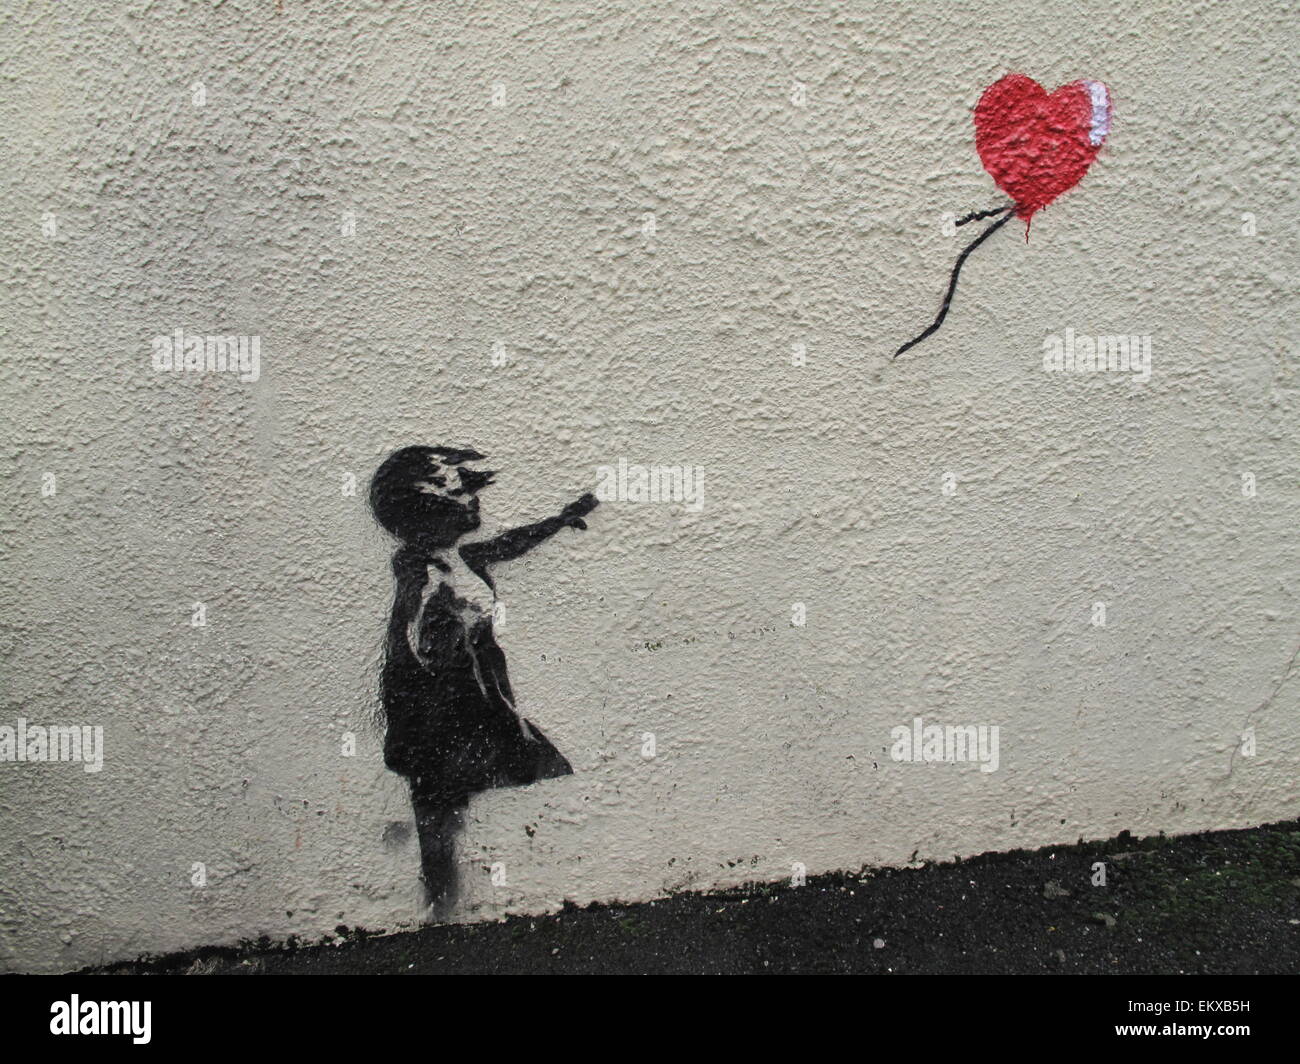 Banksy Museum Poster, Graffiti Wall Art, Urban Street Art, Girl With  Balloon Exhibition Poster -  Israel